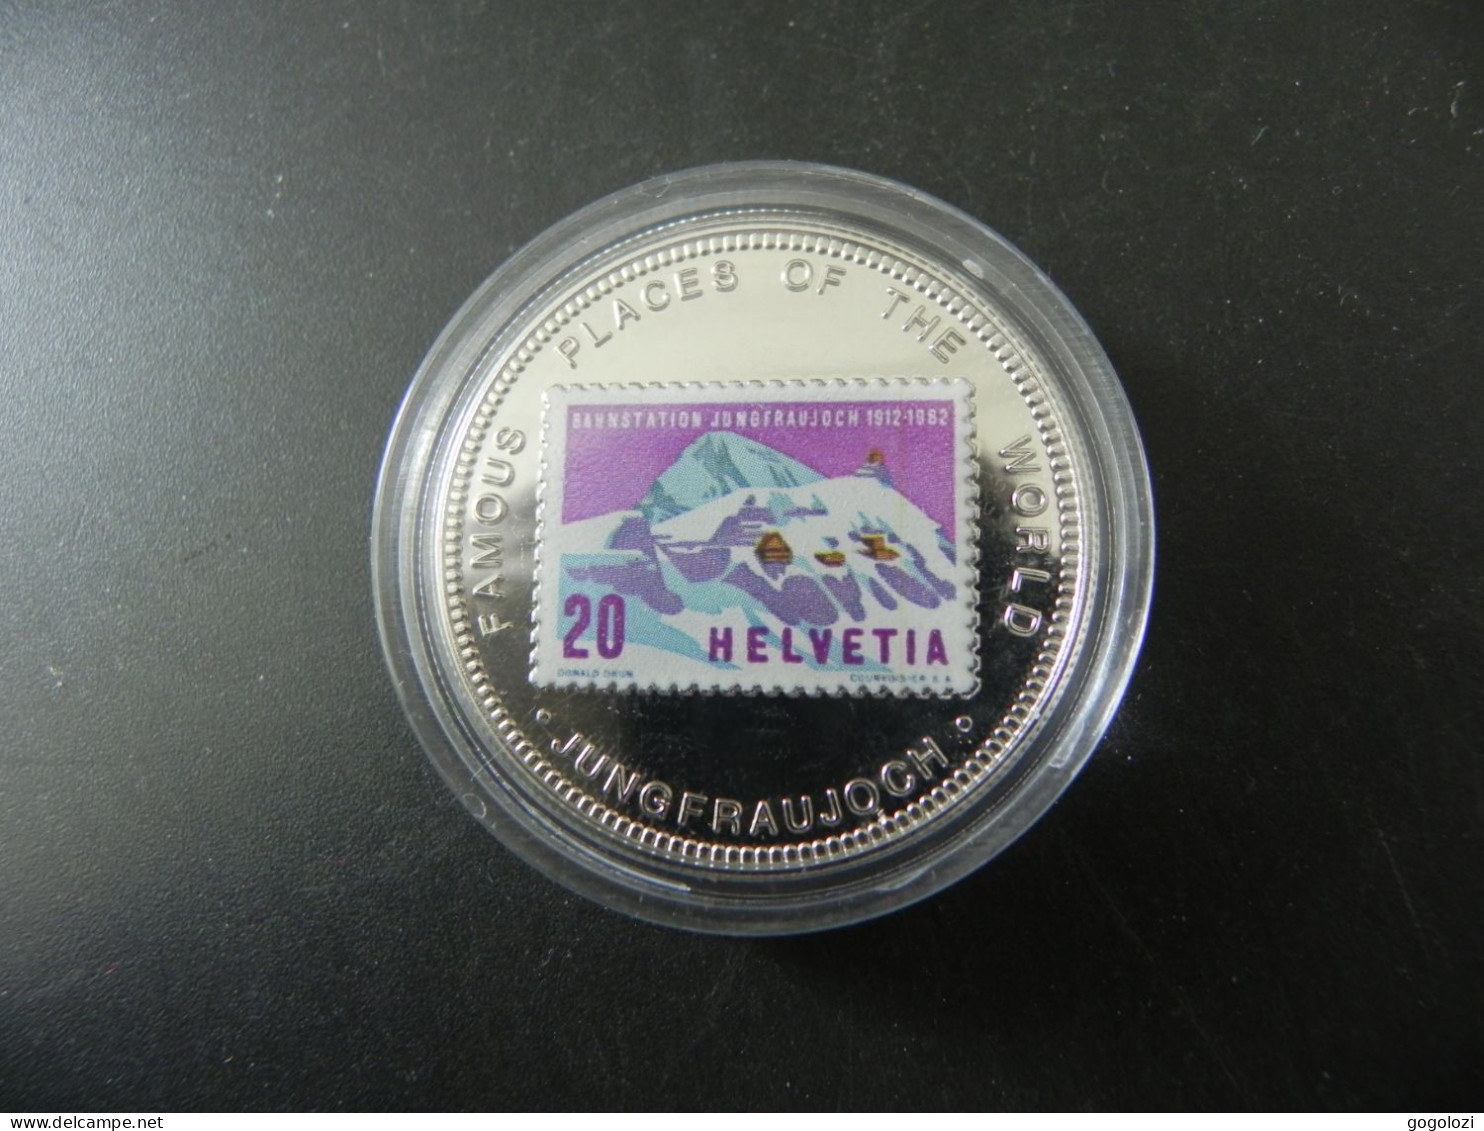 Uganda 1000 Shillings 1996 - Famous Places Of The World Switzerand Jungfraujoch - Uganda